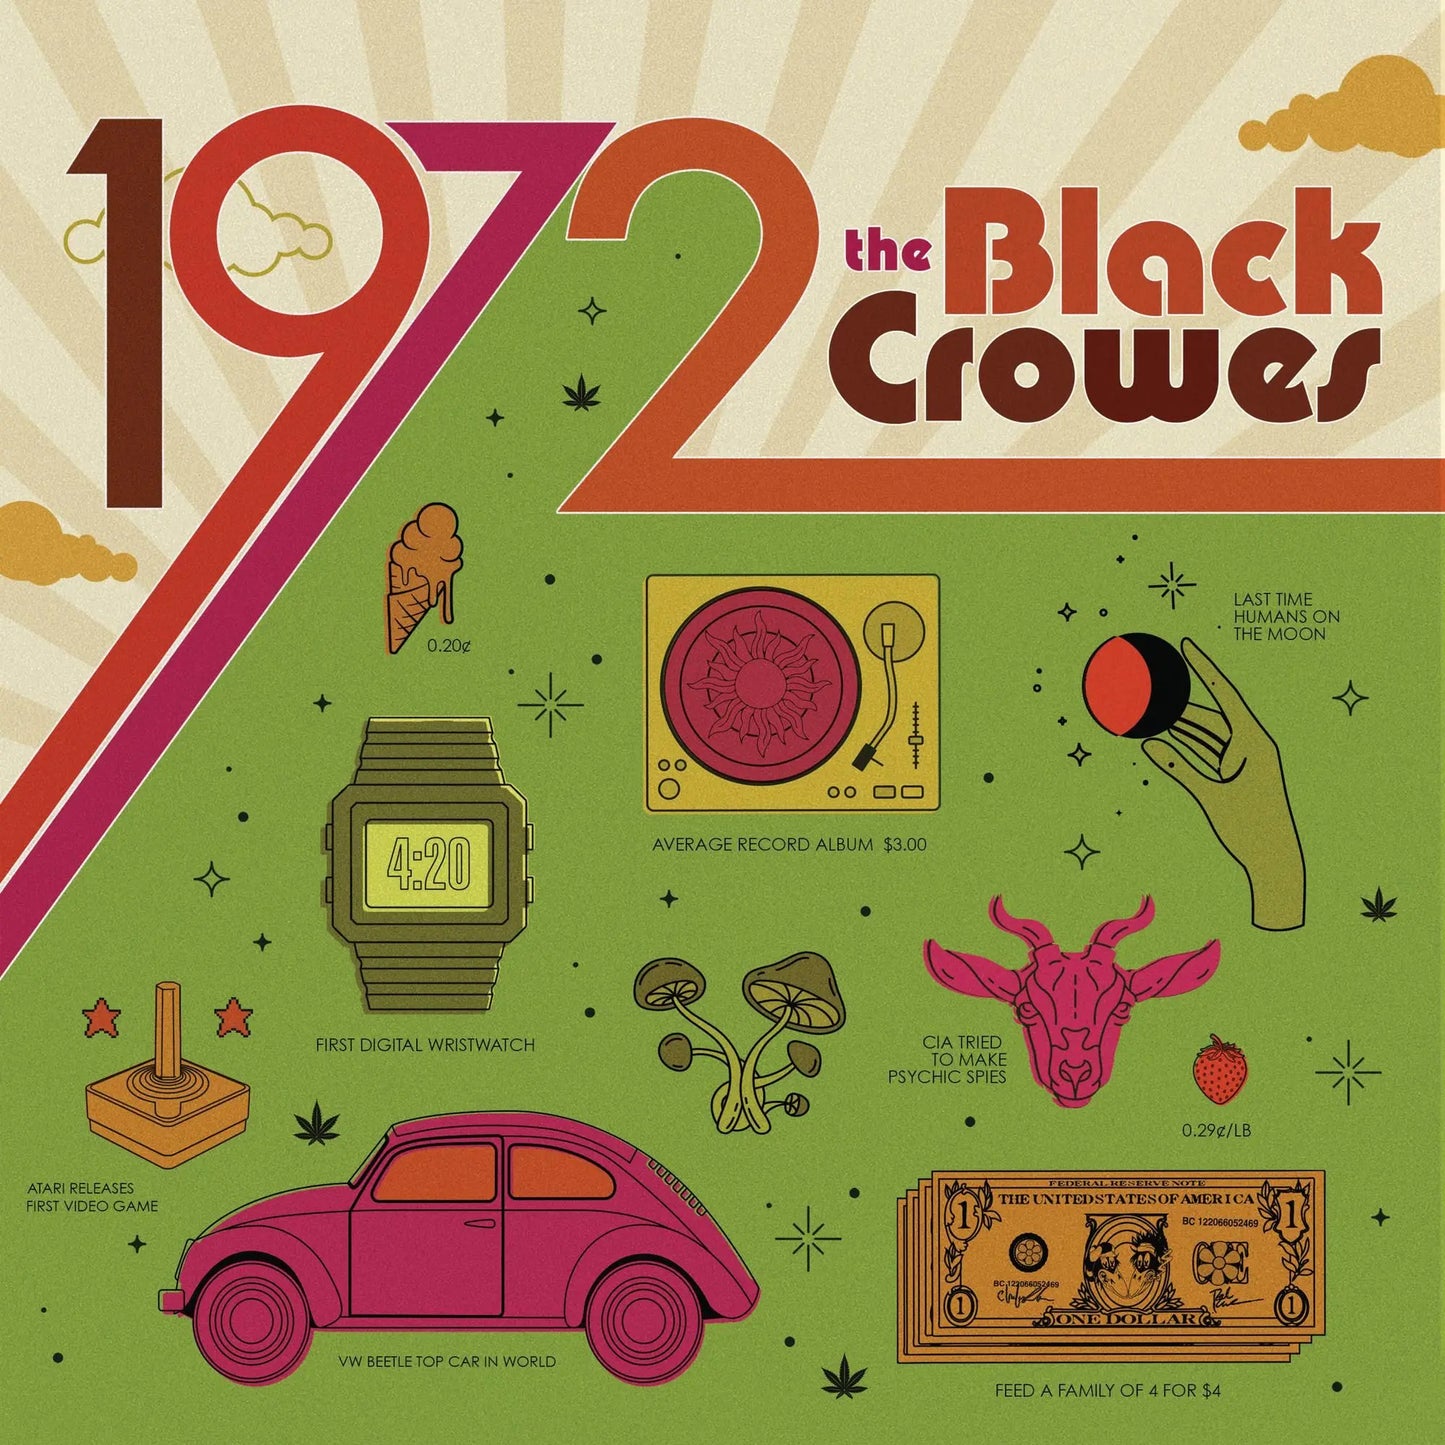 The Black Crowes - 1972 [Colored, Silver Vinyl LP]